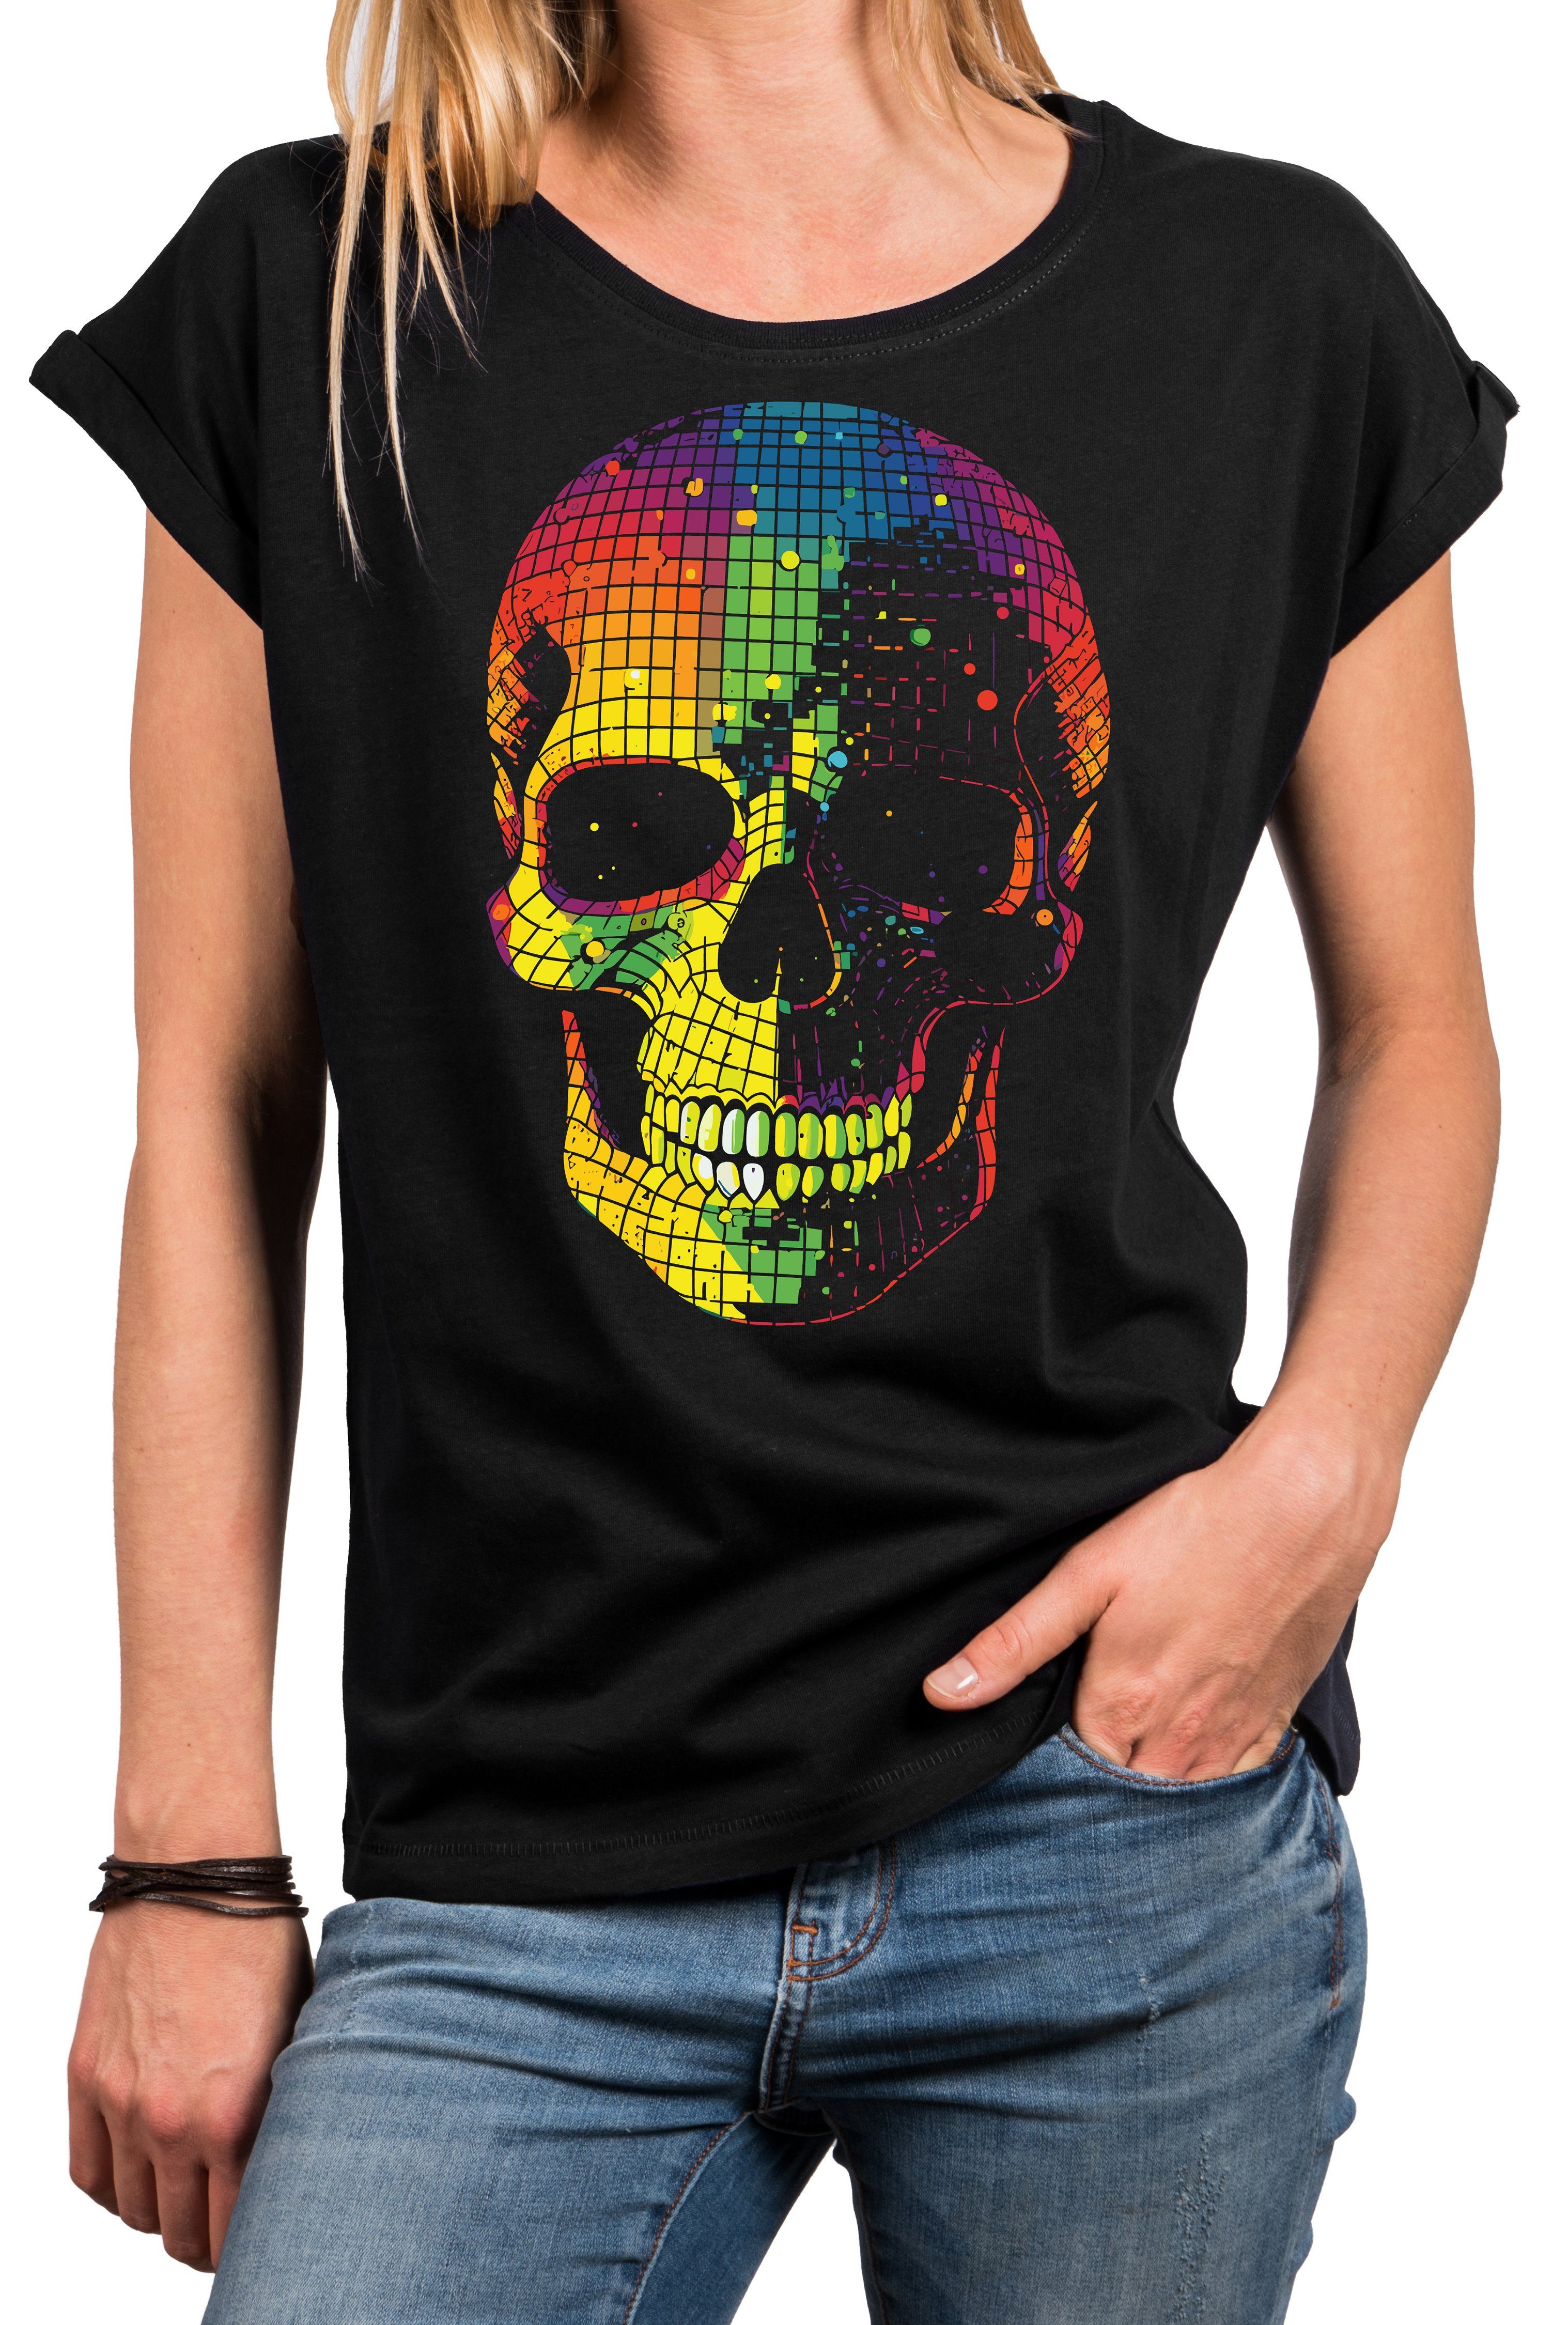 MAKAYA Print-Shirt rockige Baumwolle Kurzarm Oberteile Sommer Top Disco Damen Kurzarmshirt, Motiv Skull Totenkopf